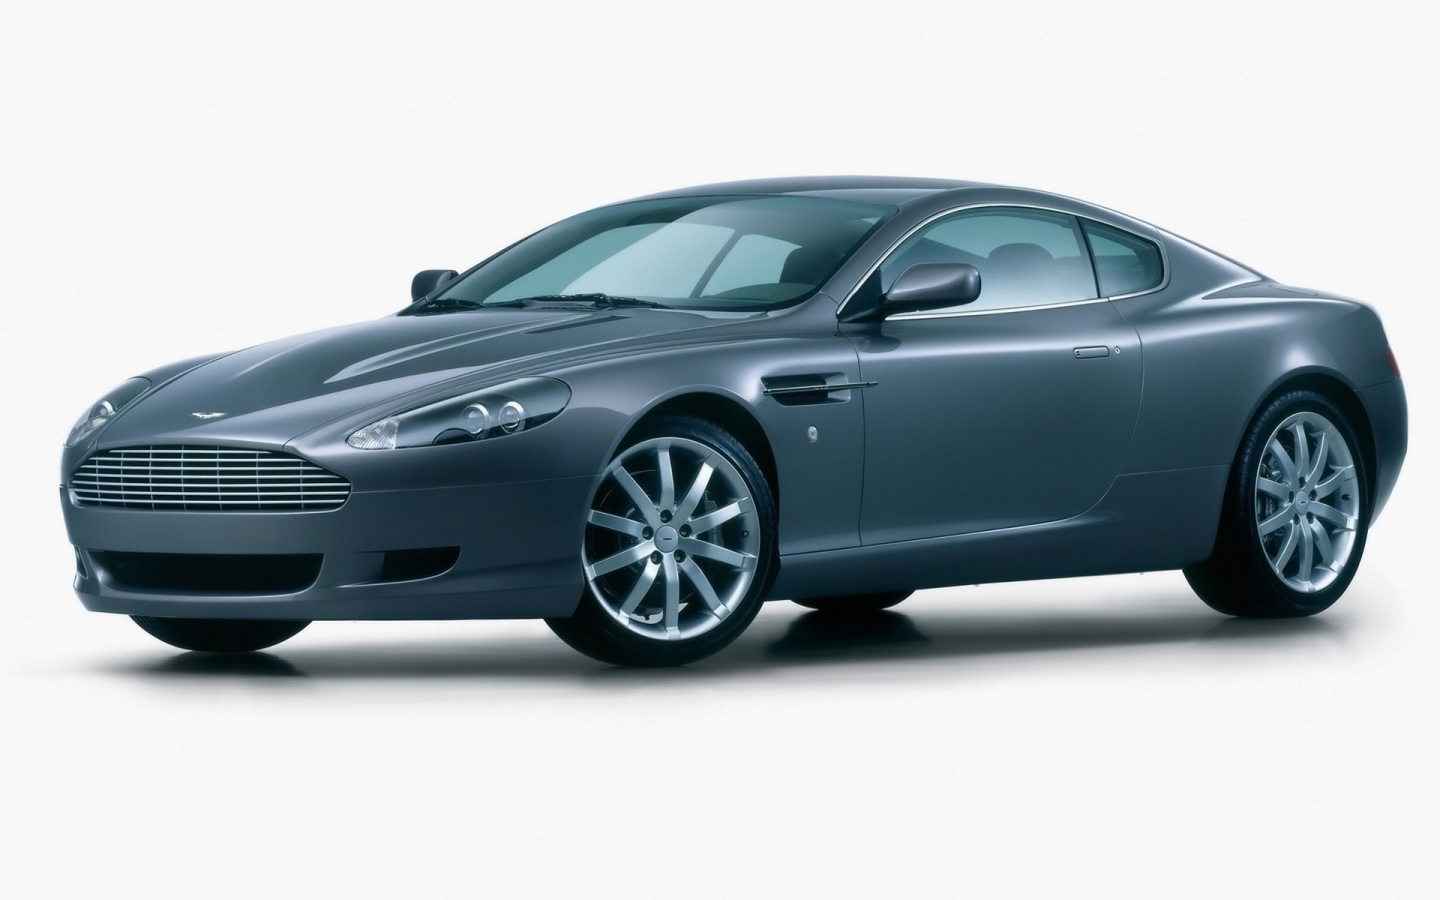 Aston Martin DB9 Studio for 1440 x 900 widescreen resolution